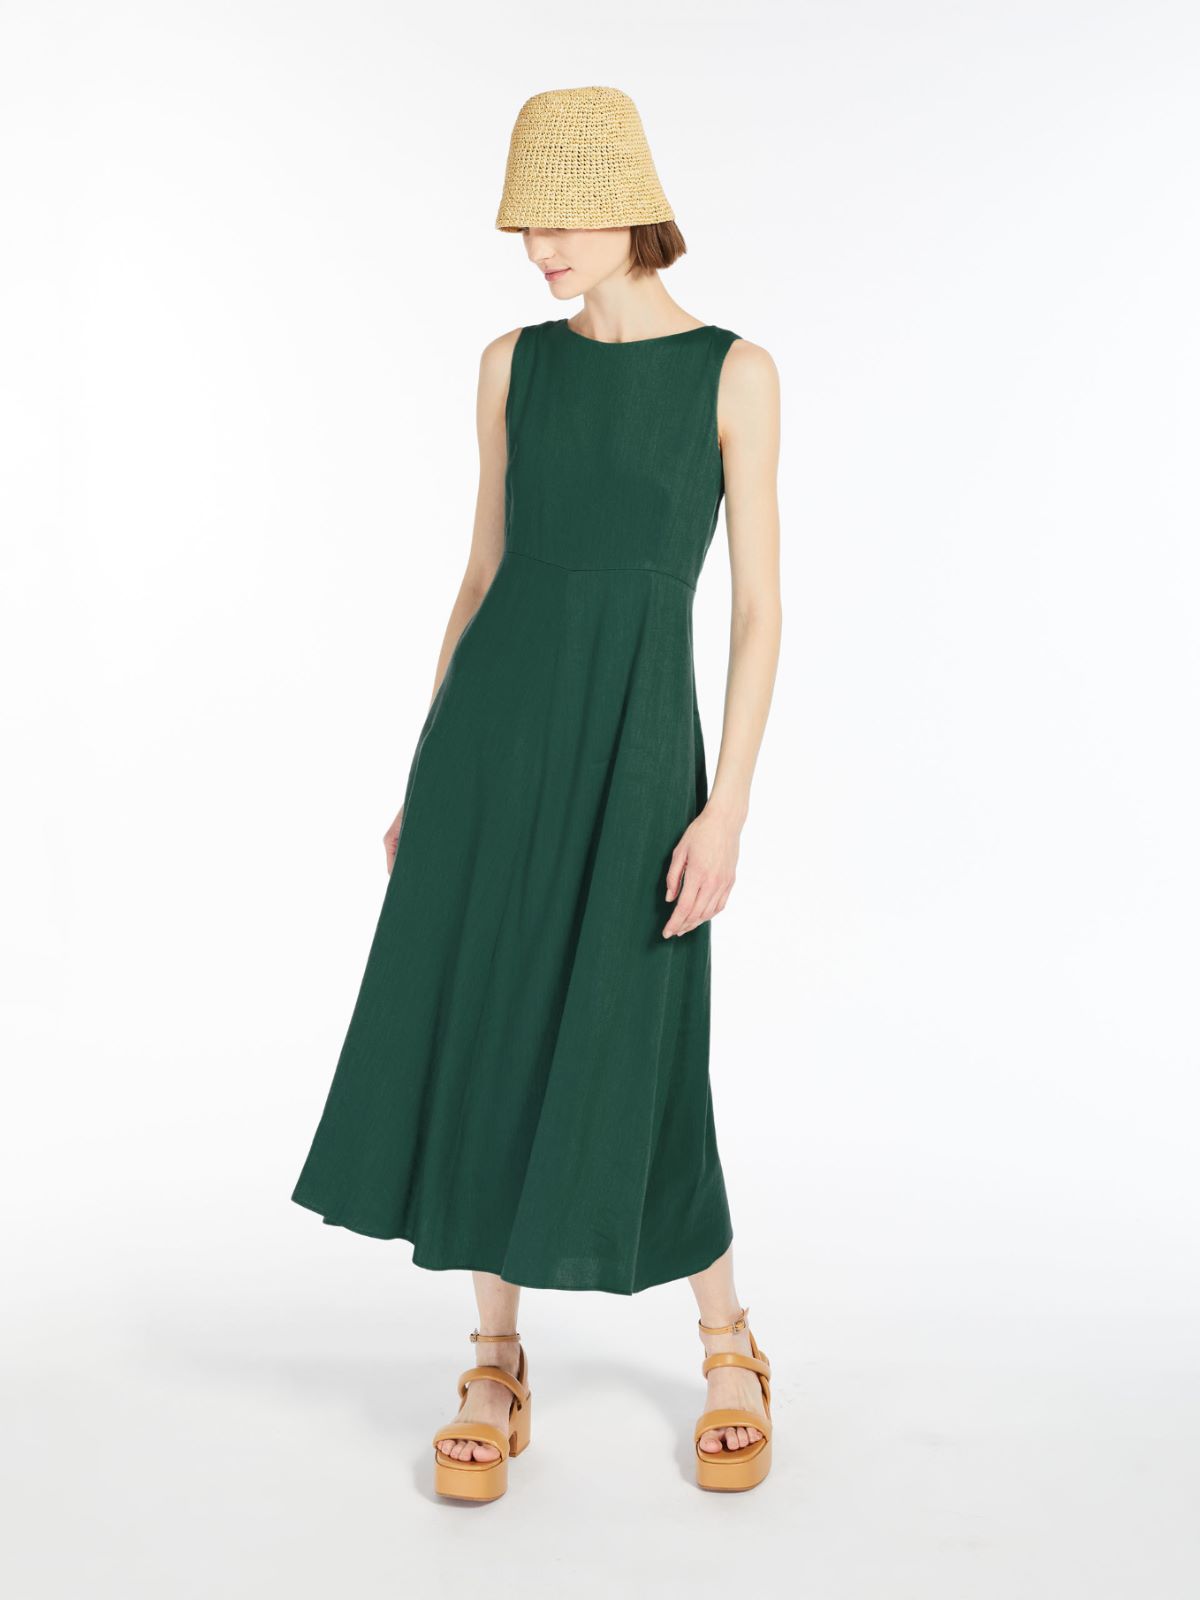 Linen and viscose dress, green | Weekend Max Mara